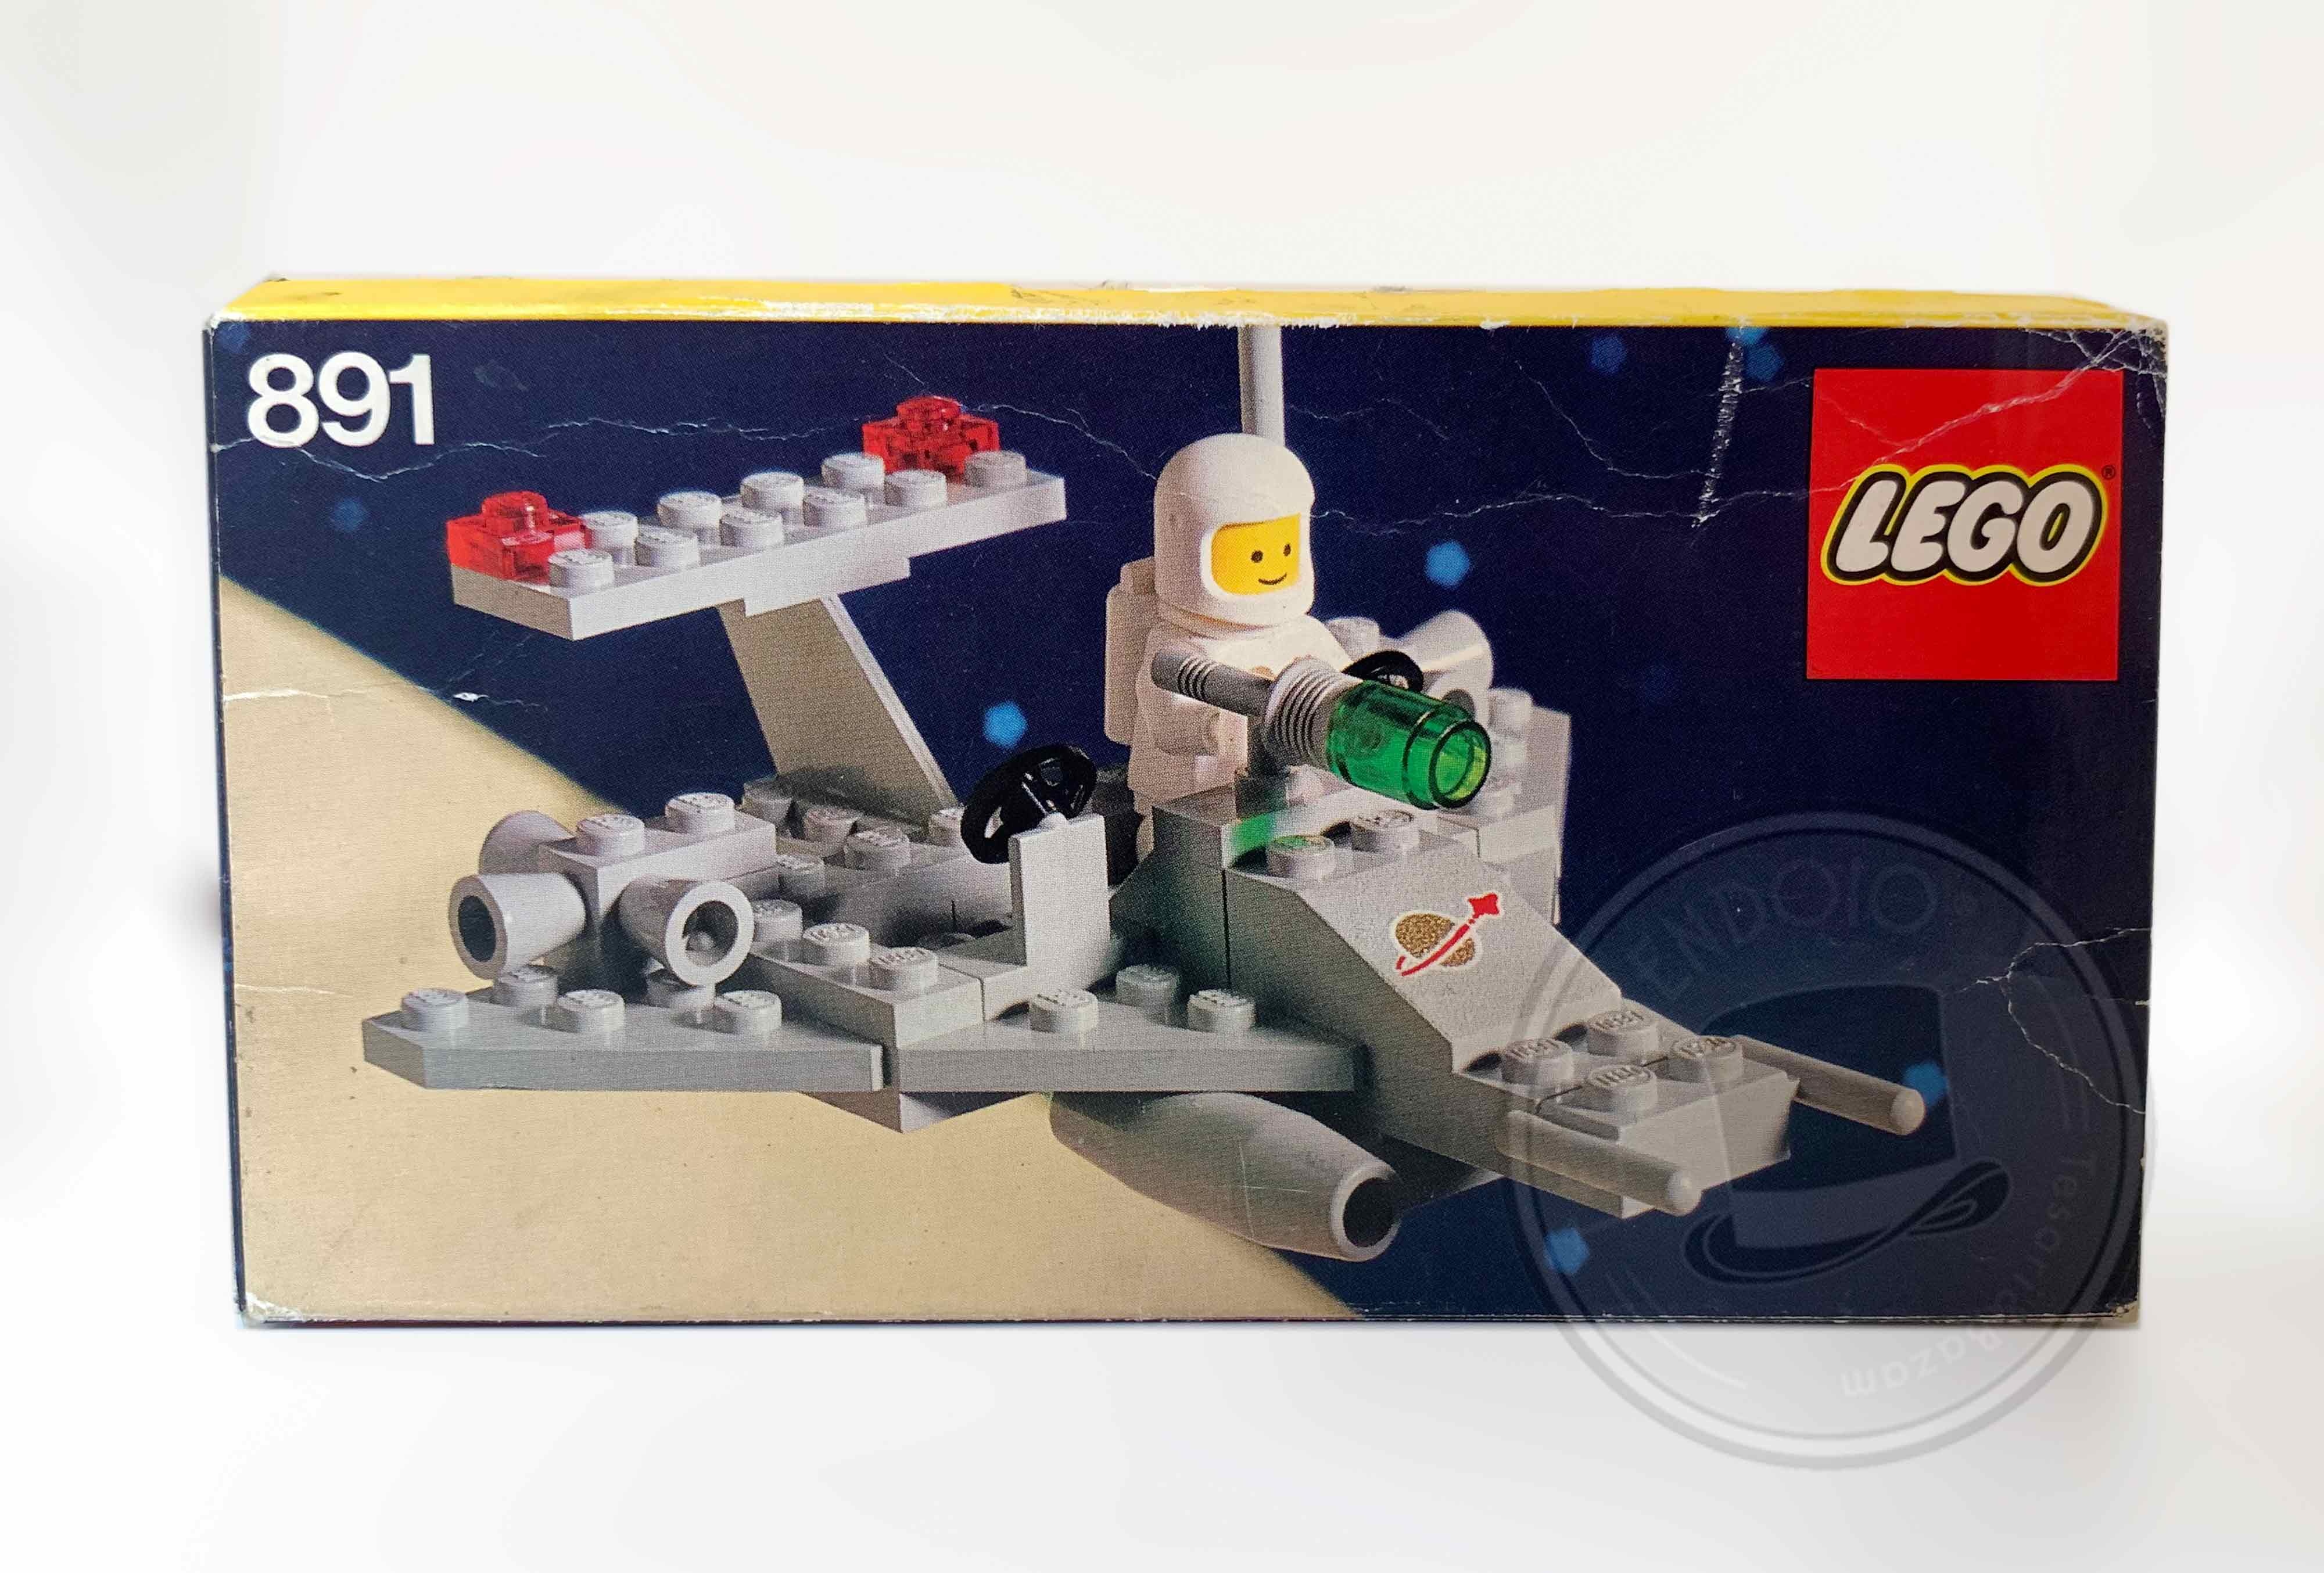 LEGO 891 Two-Man Scooter Space TELOVENDOIO